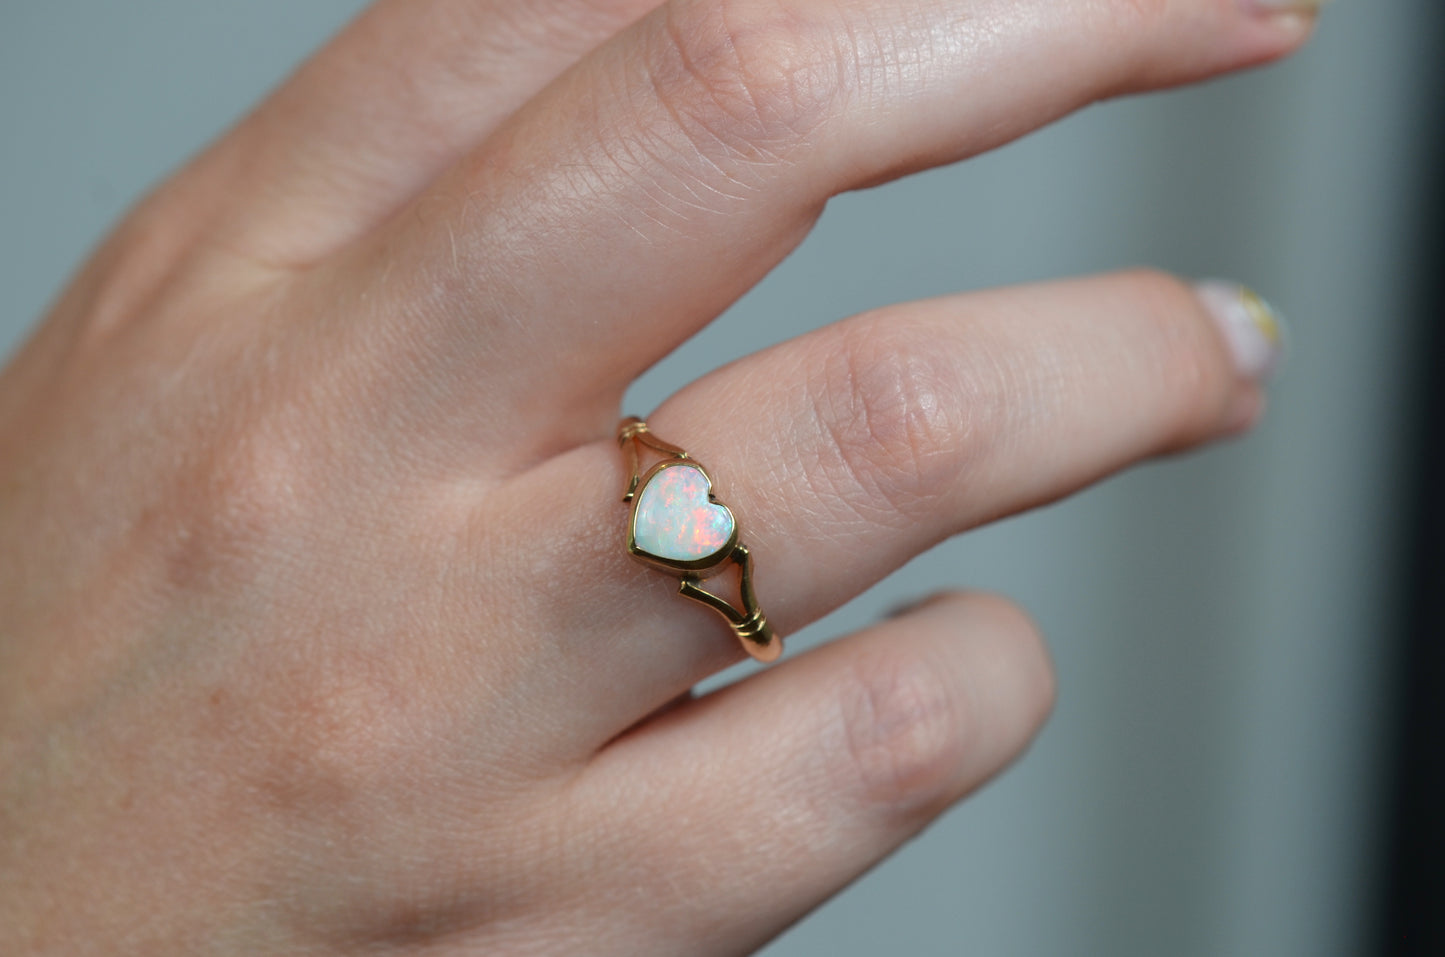 Dazzling Vintage Opal Heart Ring